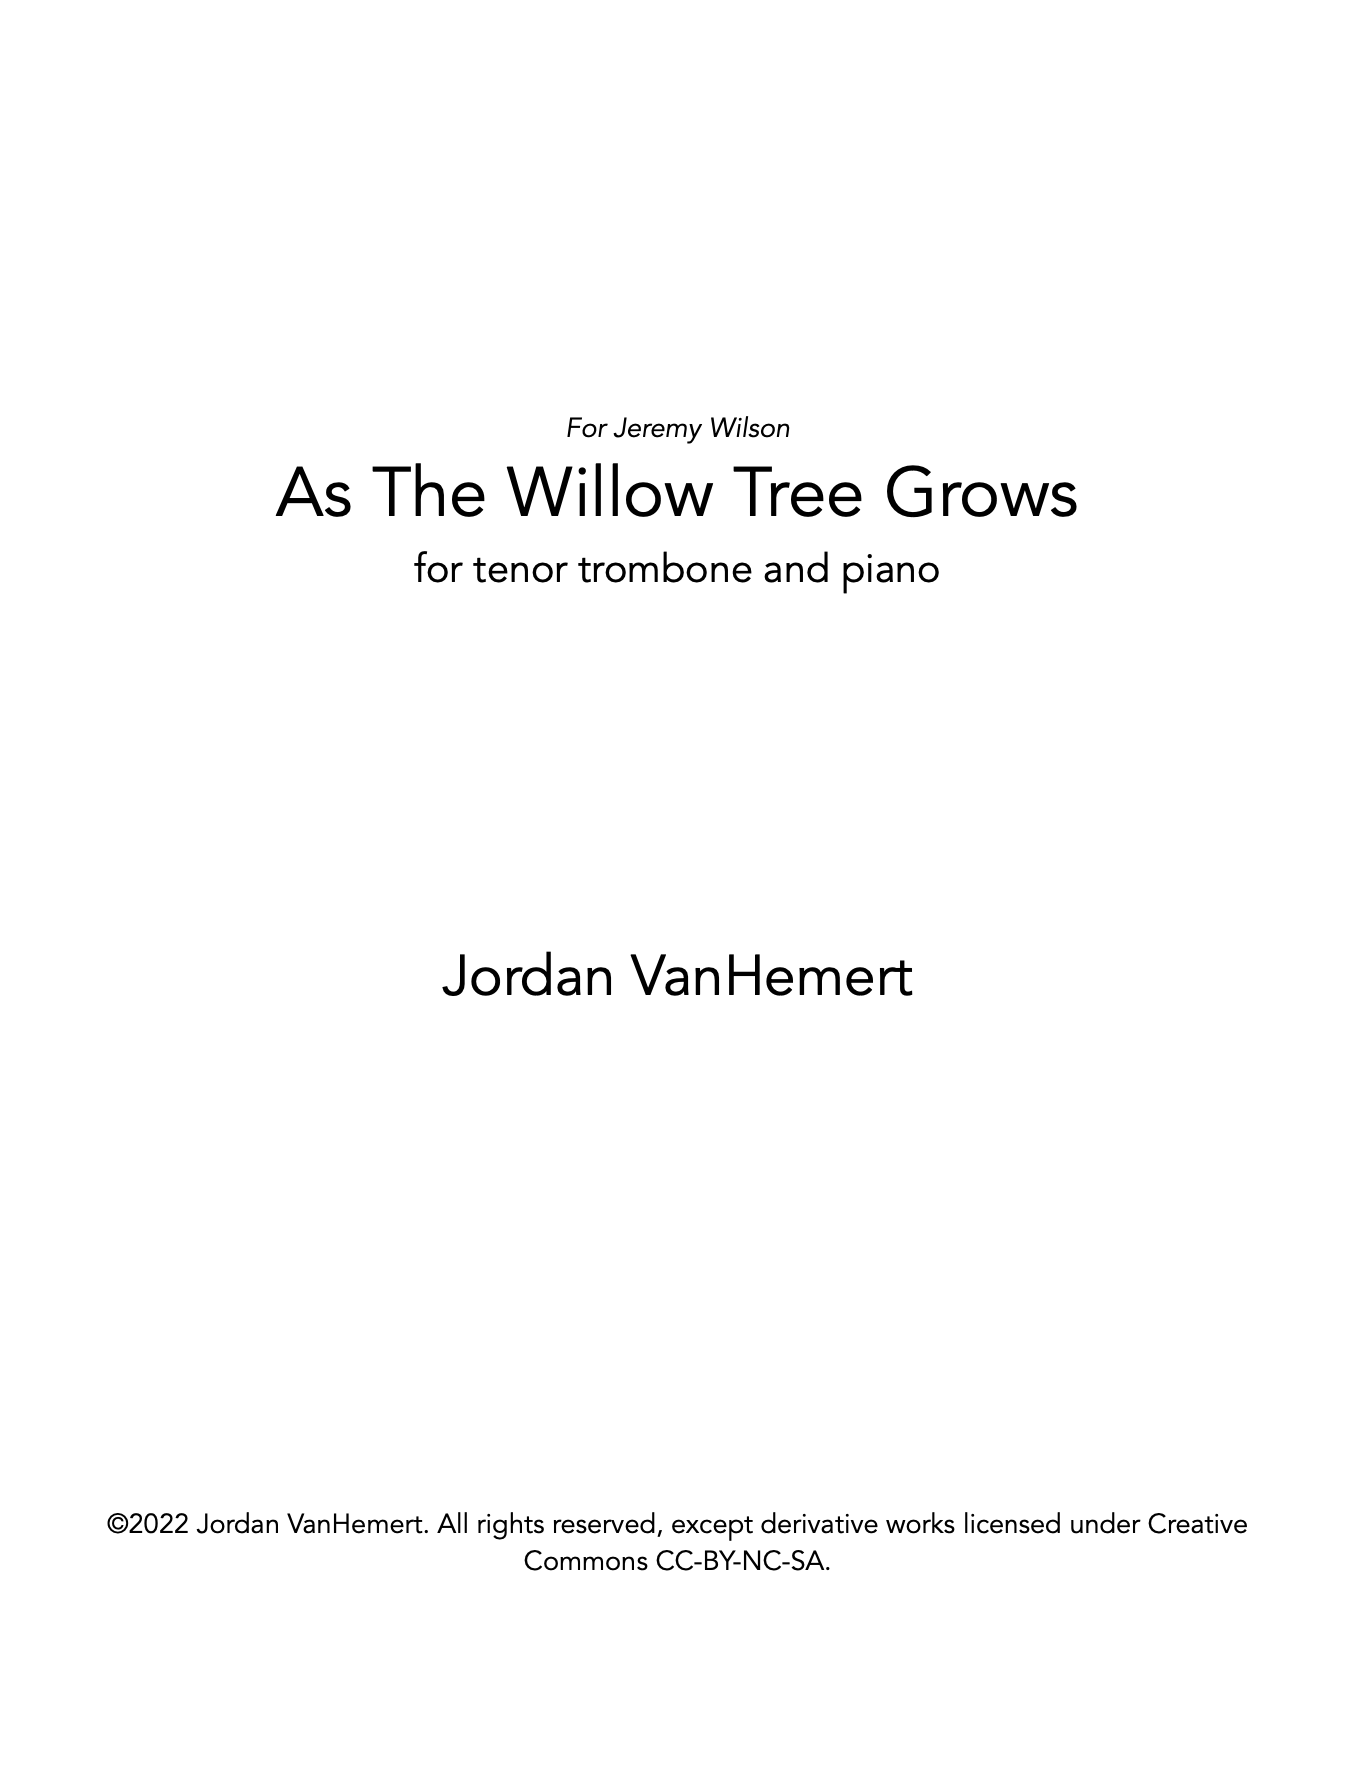 As The Willow Tree Grows by Jordan VanHemert